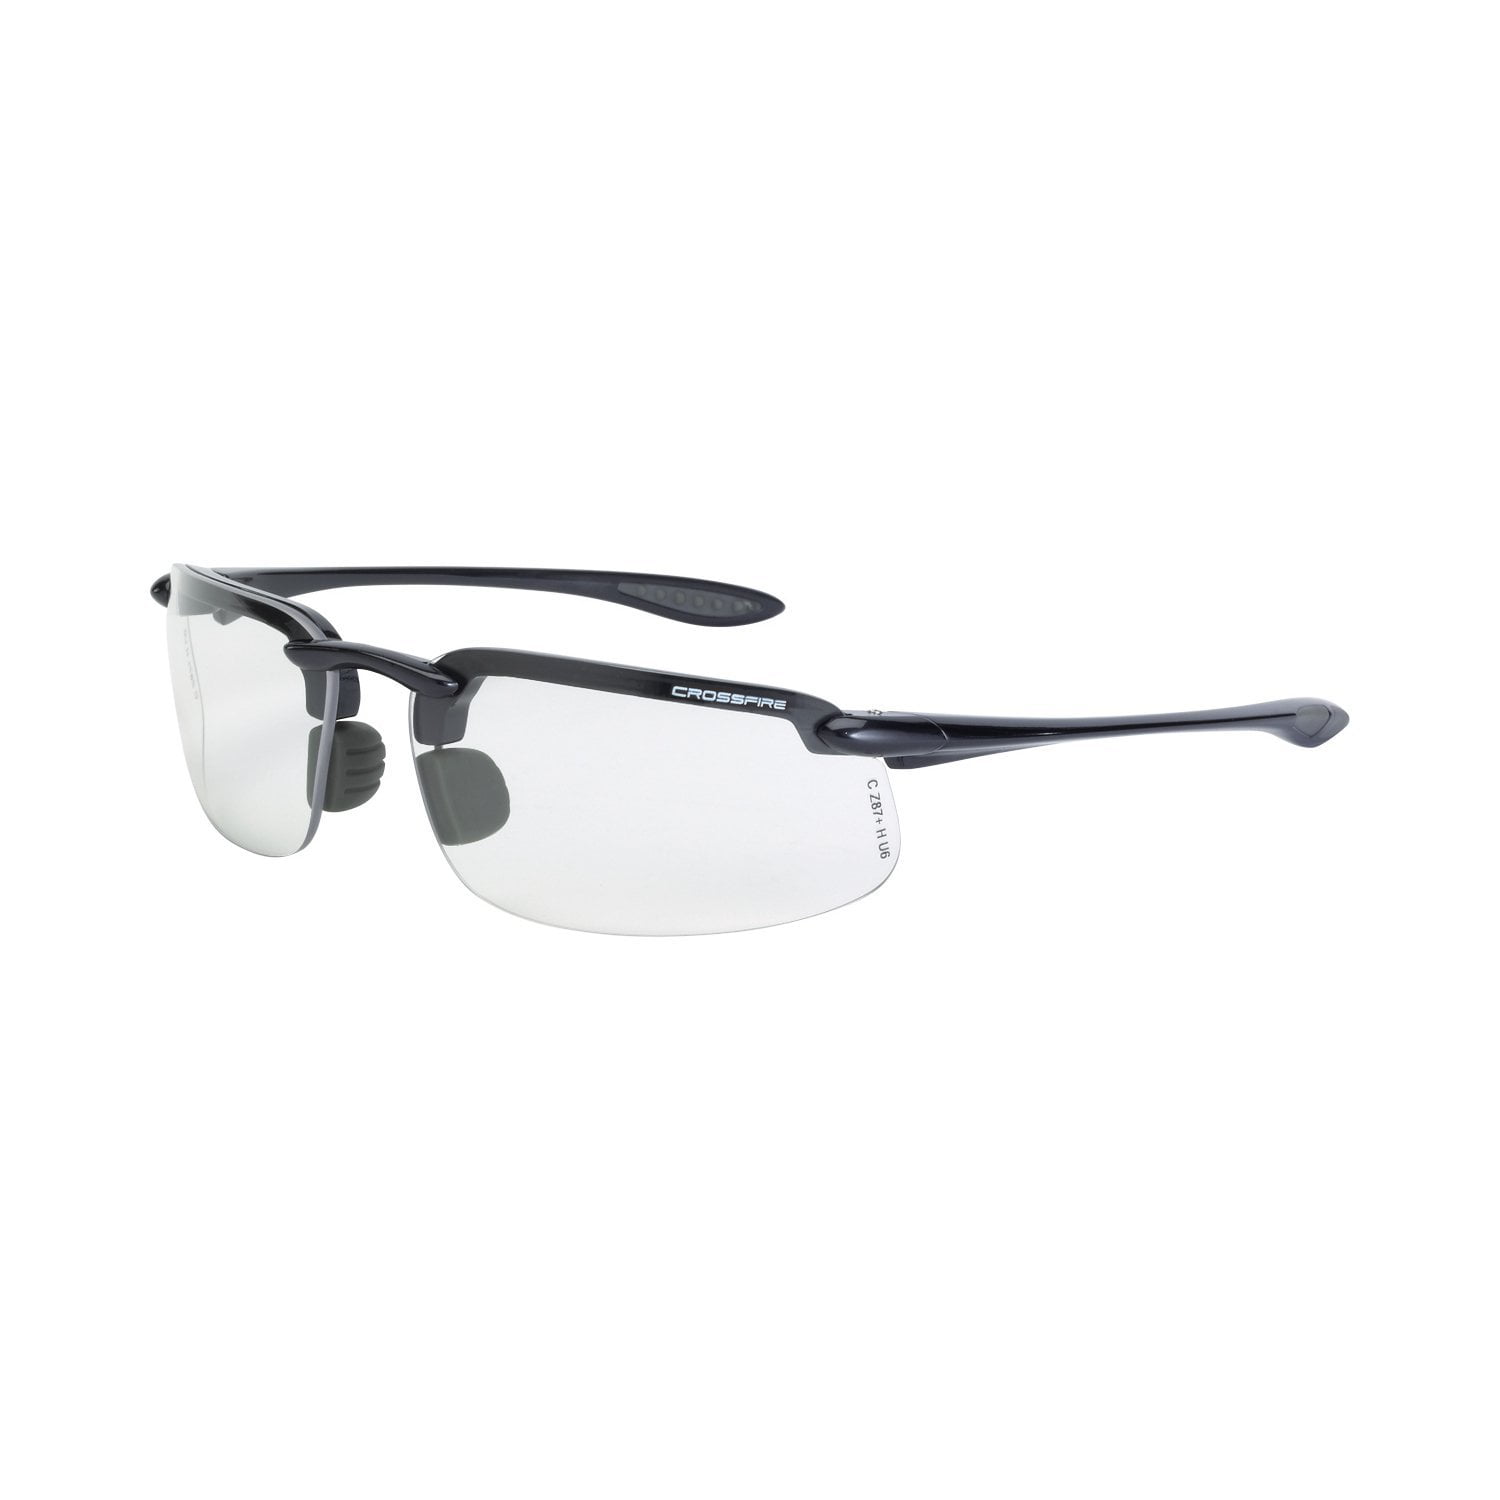 Crossfire Eyewear ES4 Safety Glasses